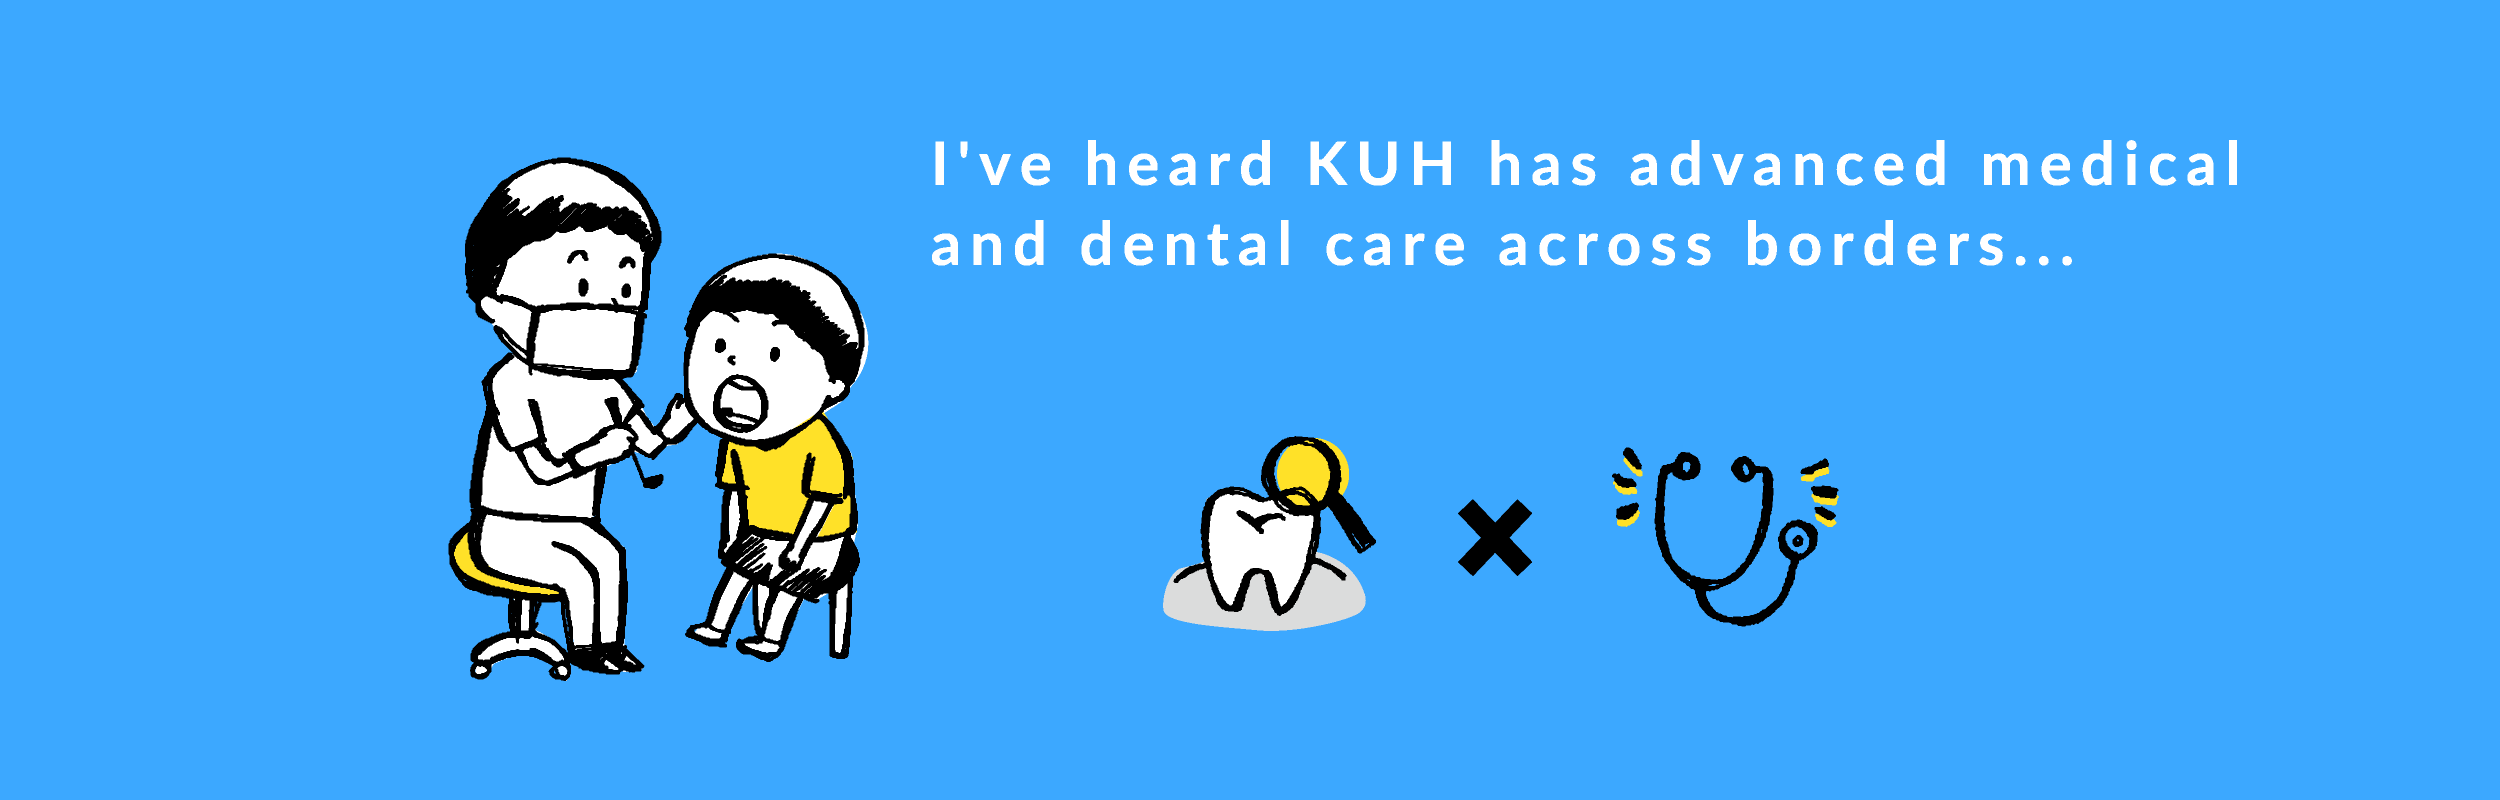 I've heard KUH has advanced medical and dental care across borders...